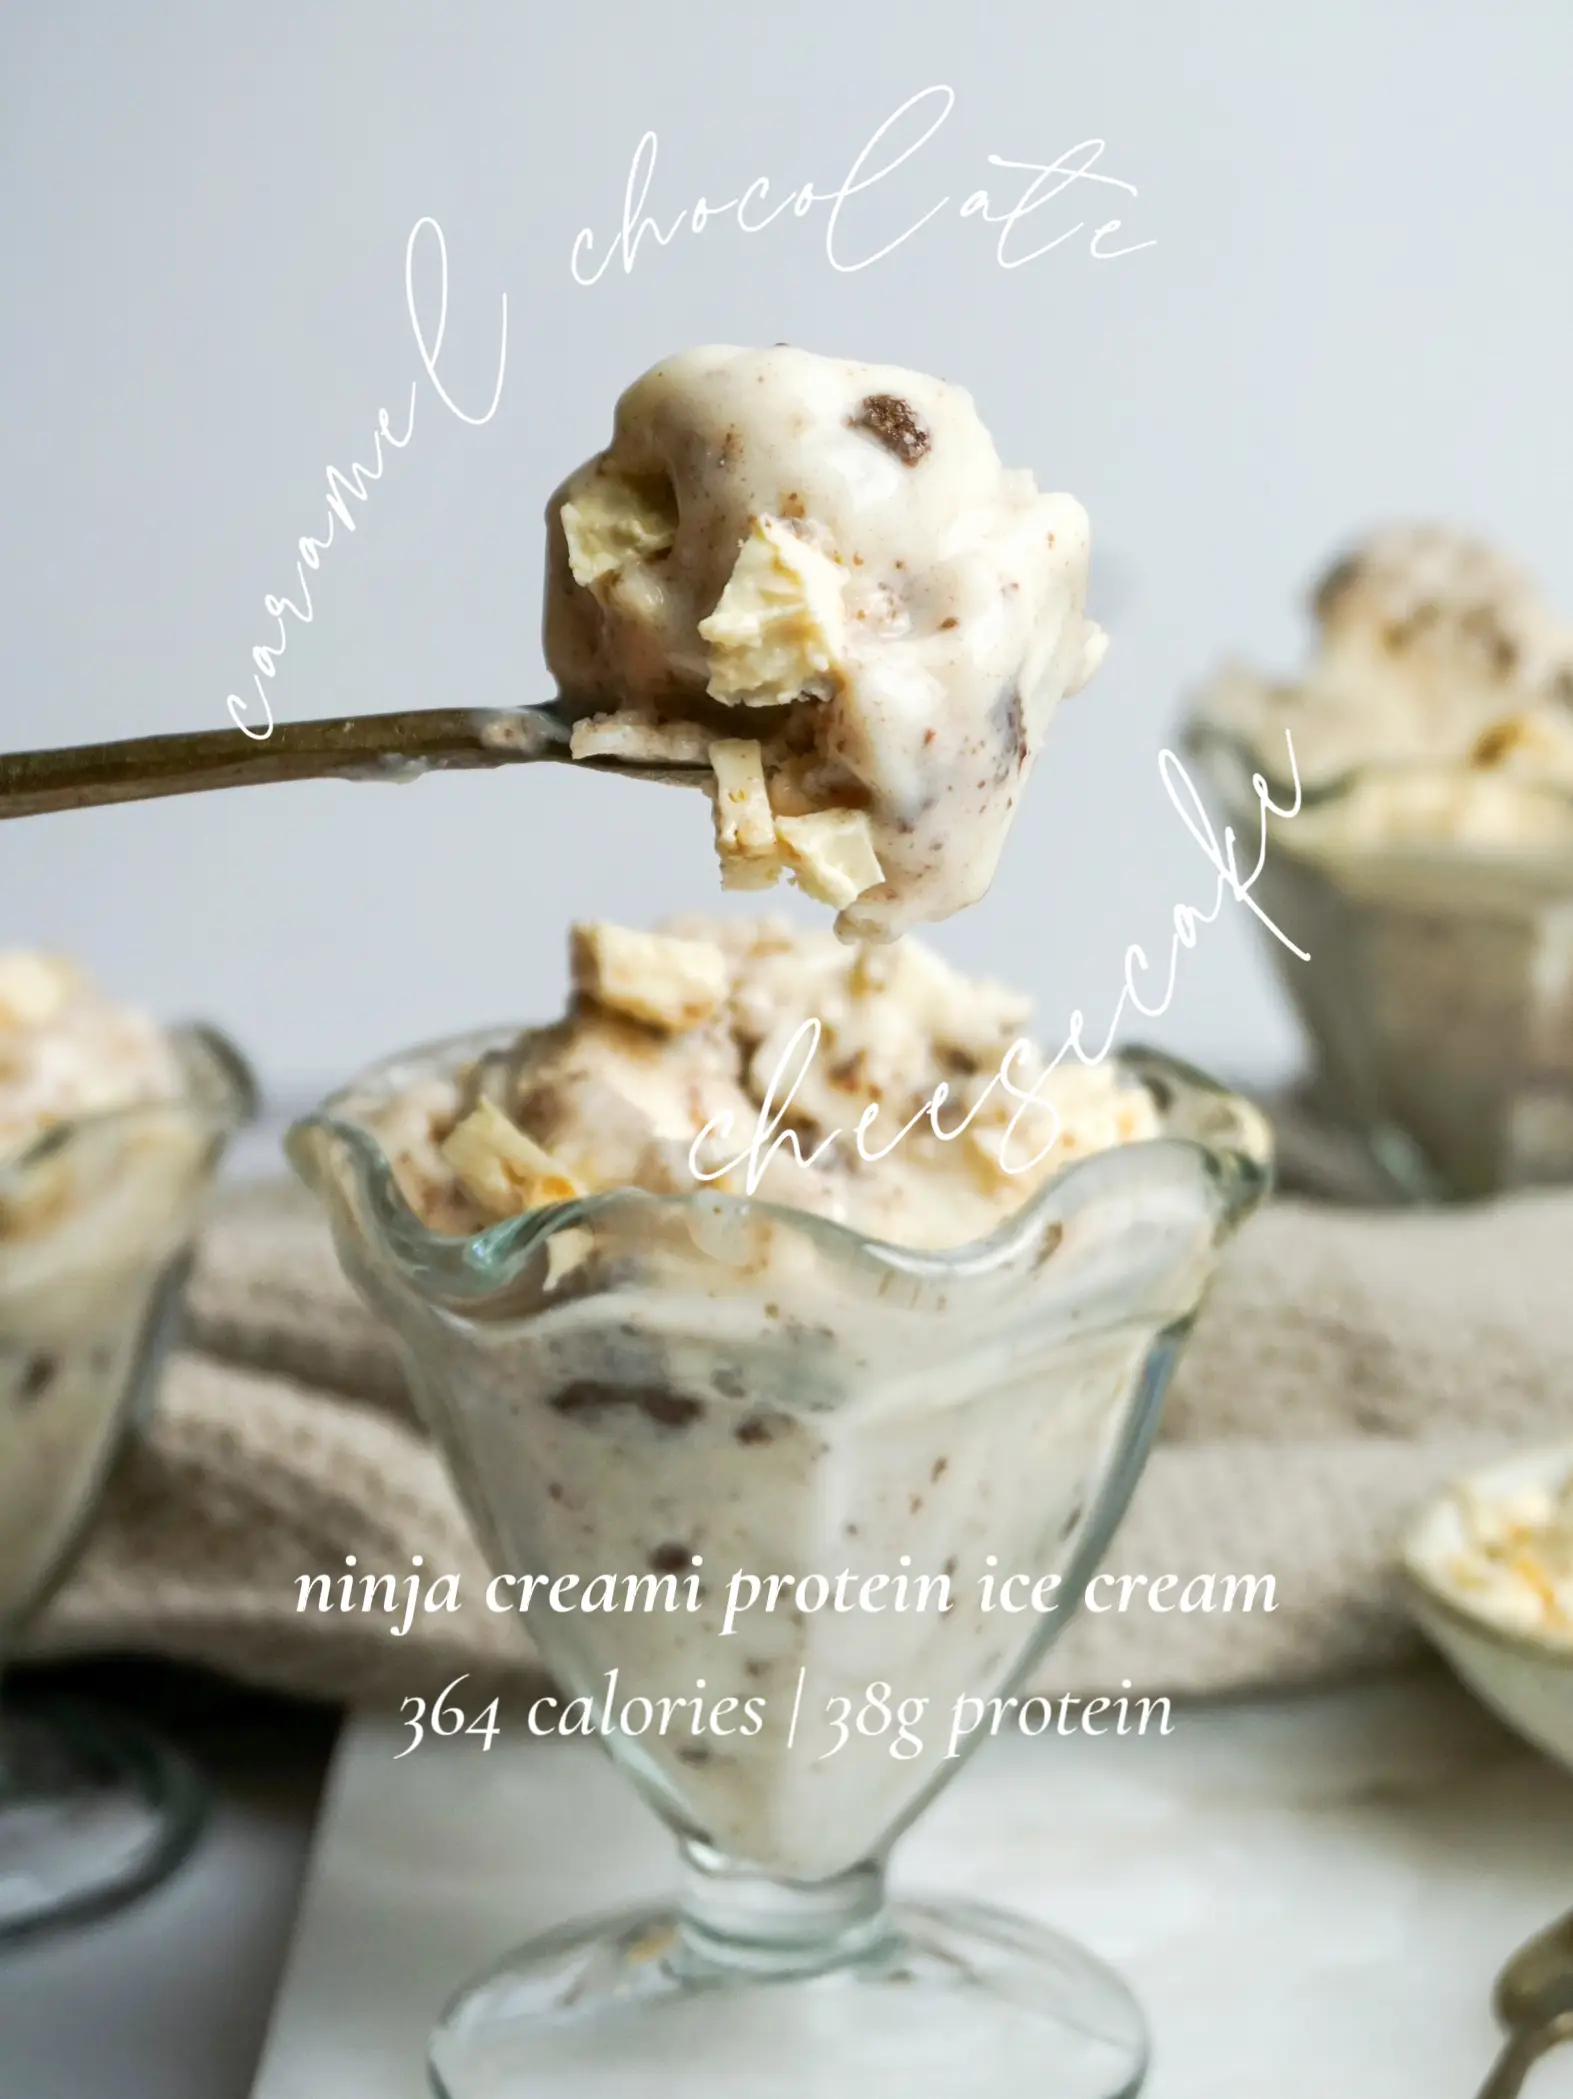 Cottage Cheese Ice Cream (Ninja Creami Recipe) - The Balanced